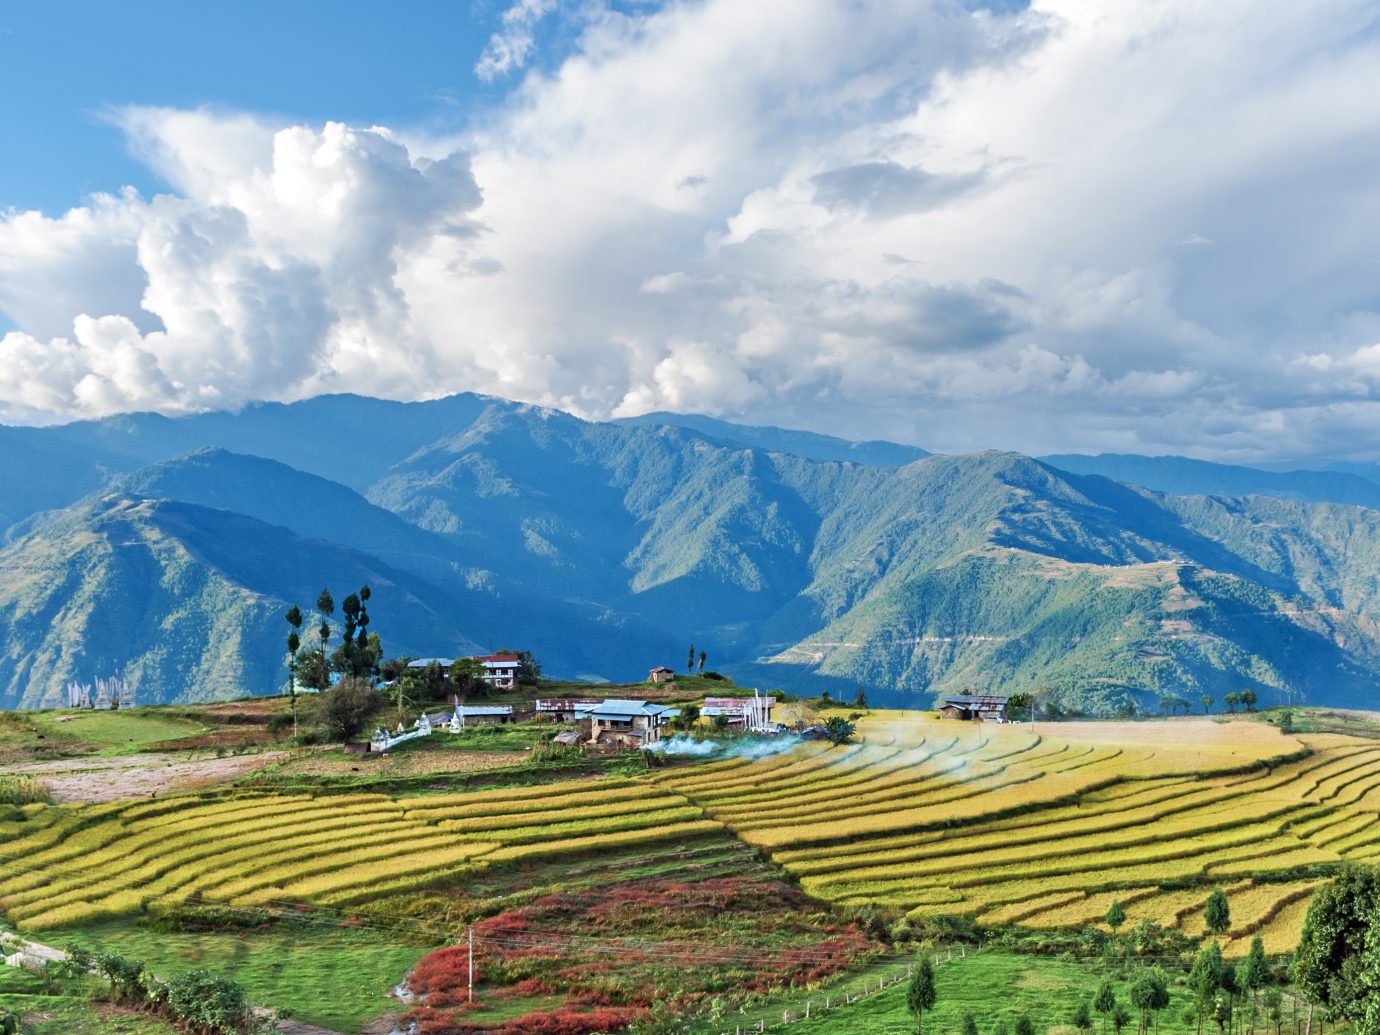 Farm in Bhutan eastern mountains near Trashigang - Eastern Bhutan